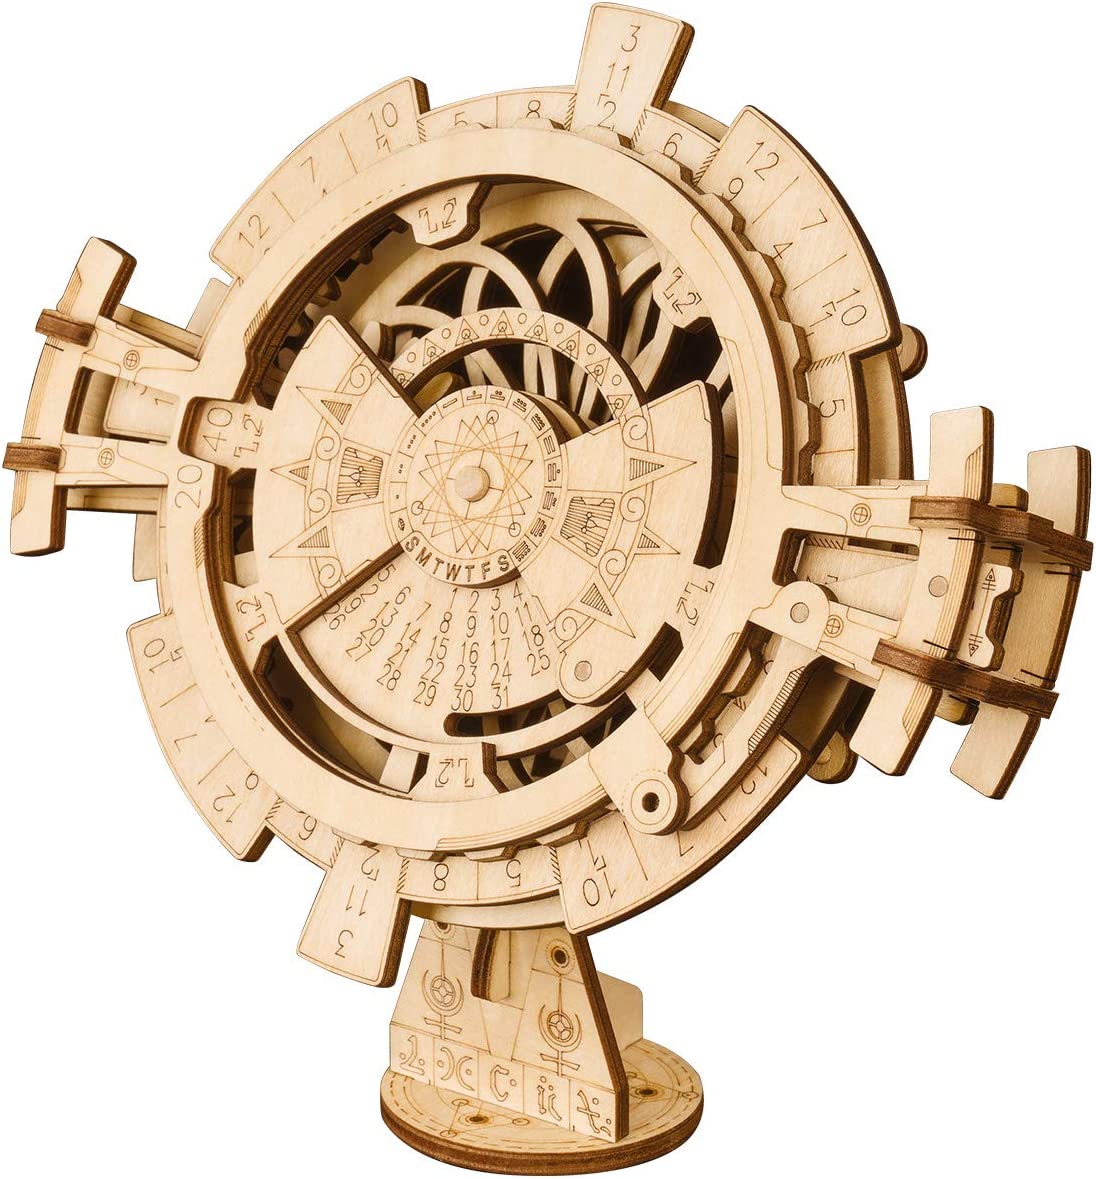 ROKR DIY 3D Wooden Puzzle Perpetual Calendar Assembly Kids Toy Jigsaws